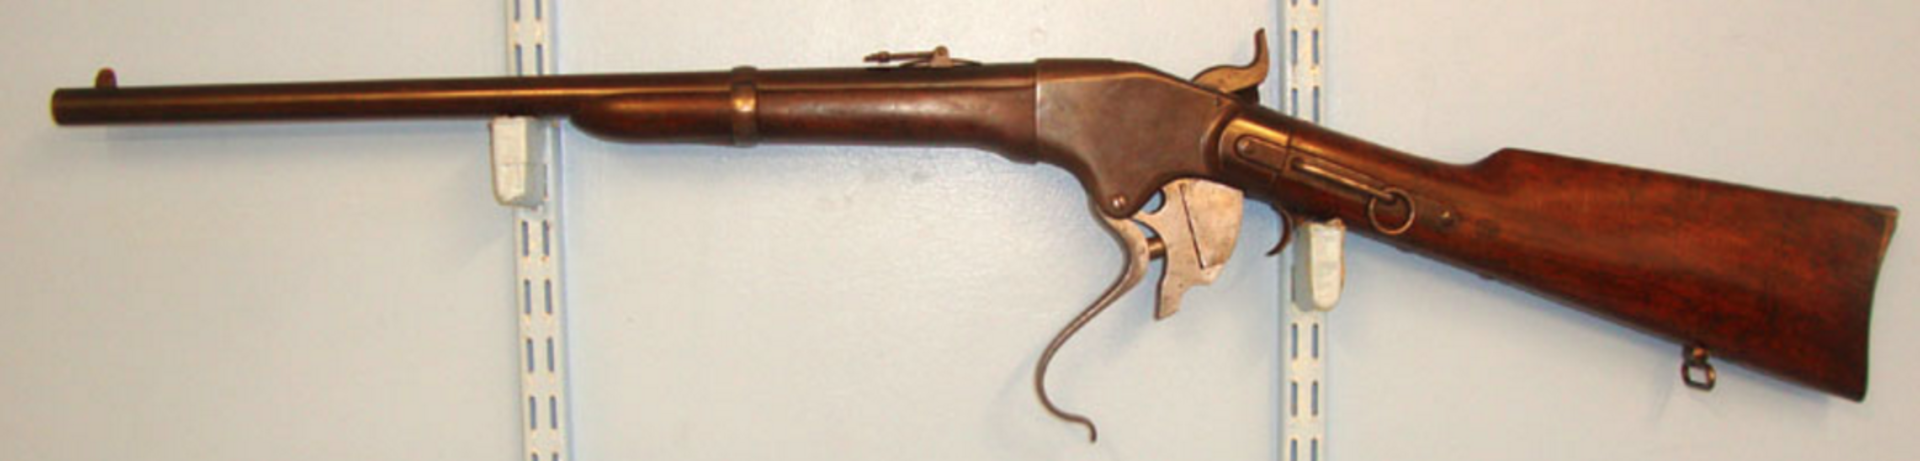 RARE, American Civil War Era 1860's Spencer .52 Calibre Repeating Union Cavalry Rifle - Image 3 of 3